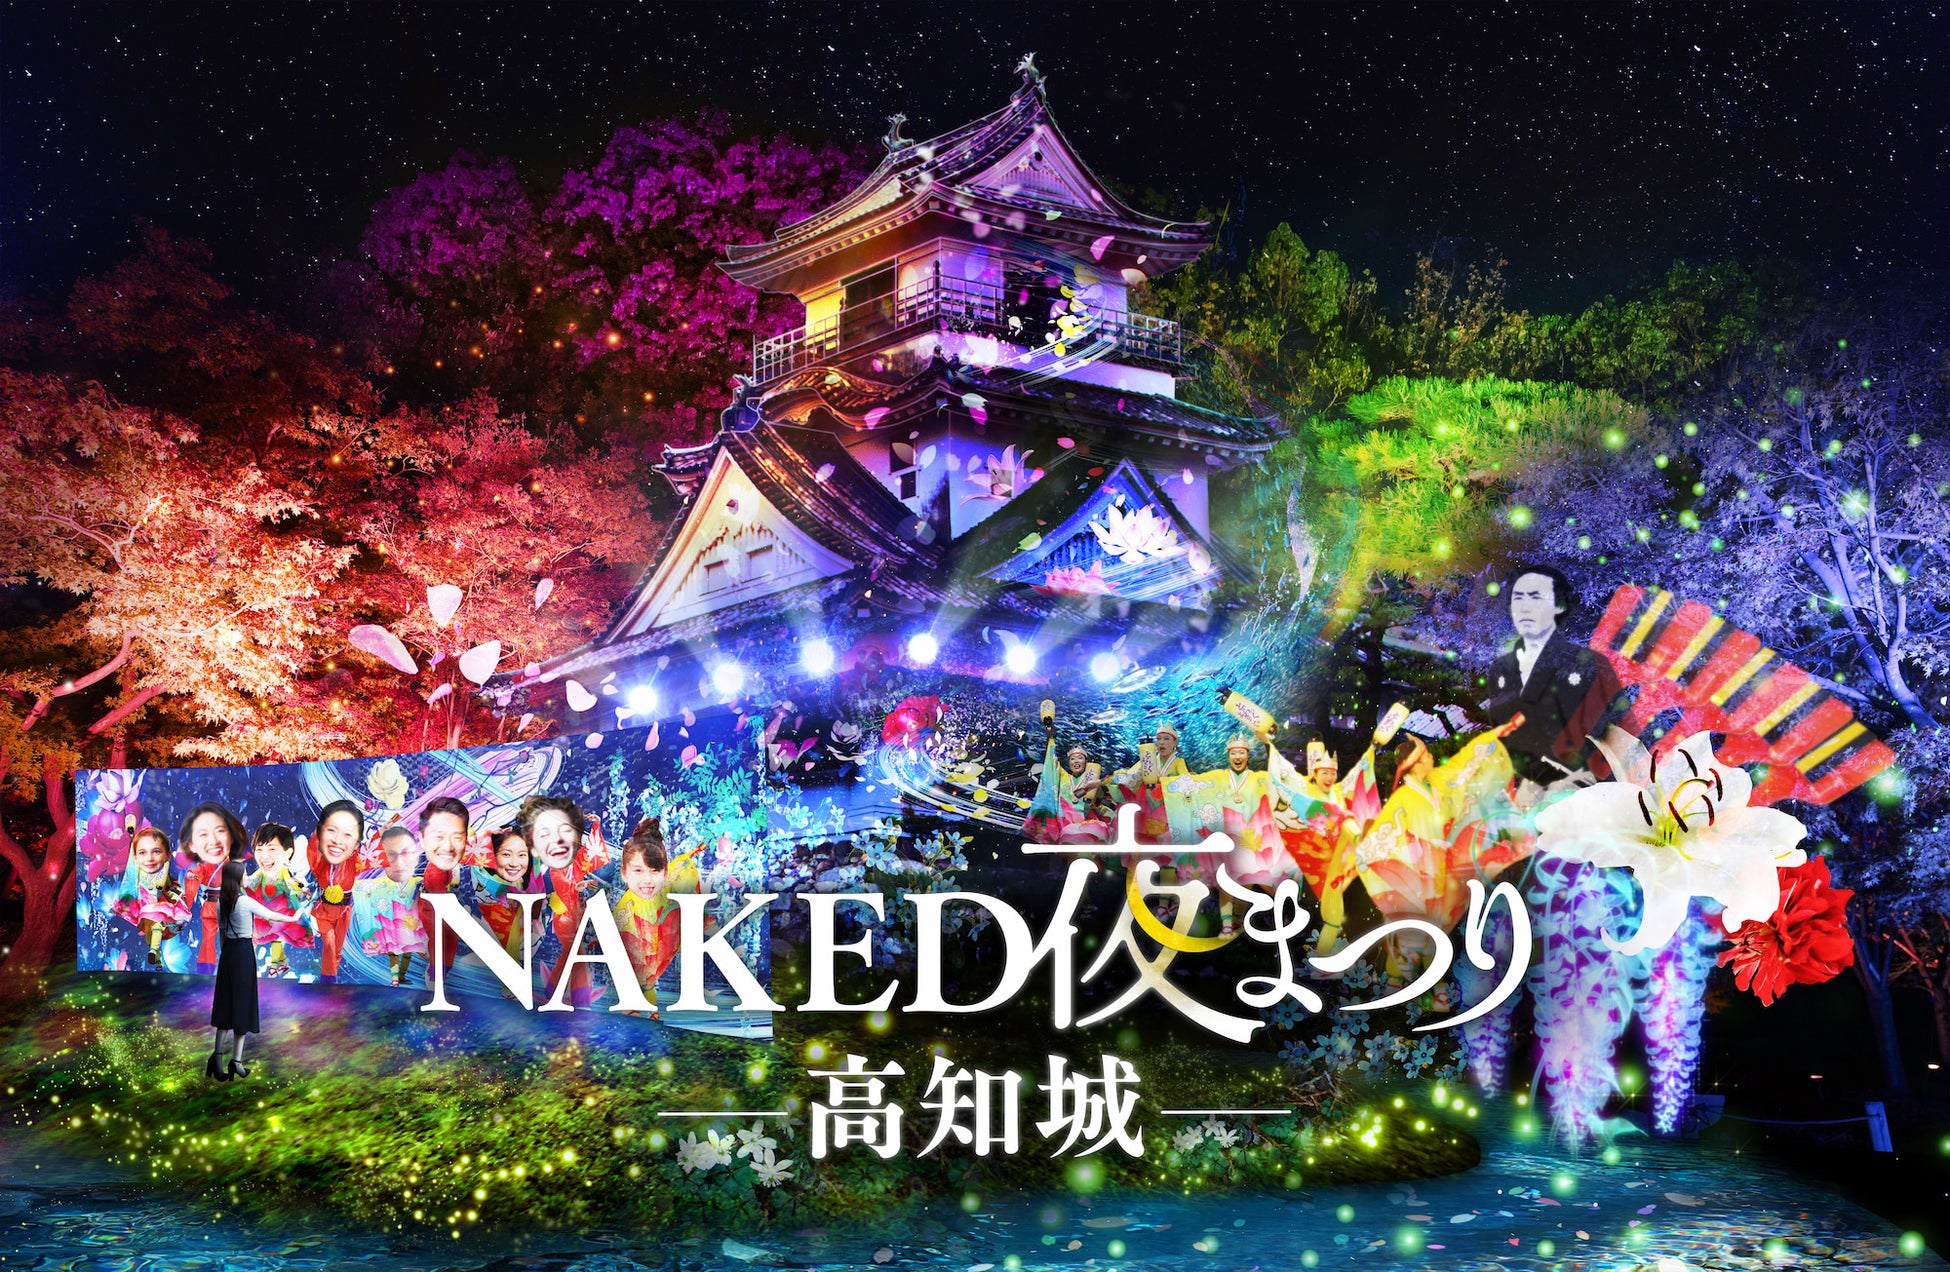 『NAKED夜まつり 高知城』初開催決定！高知城とネイキッド、新作で再びコラボ